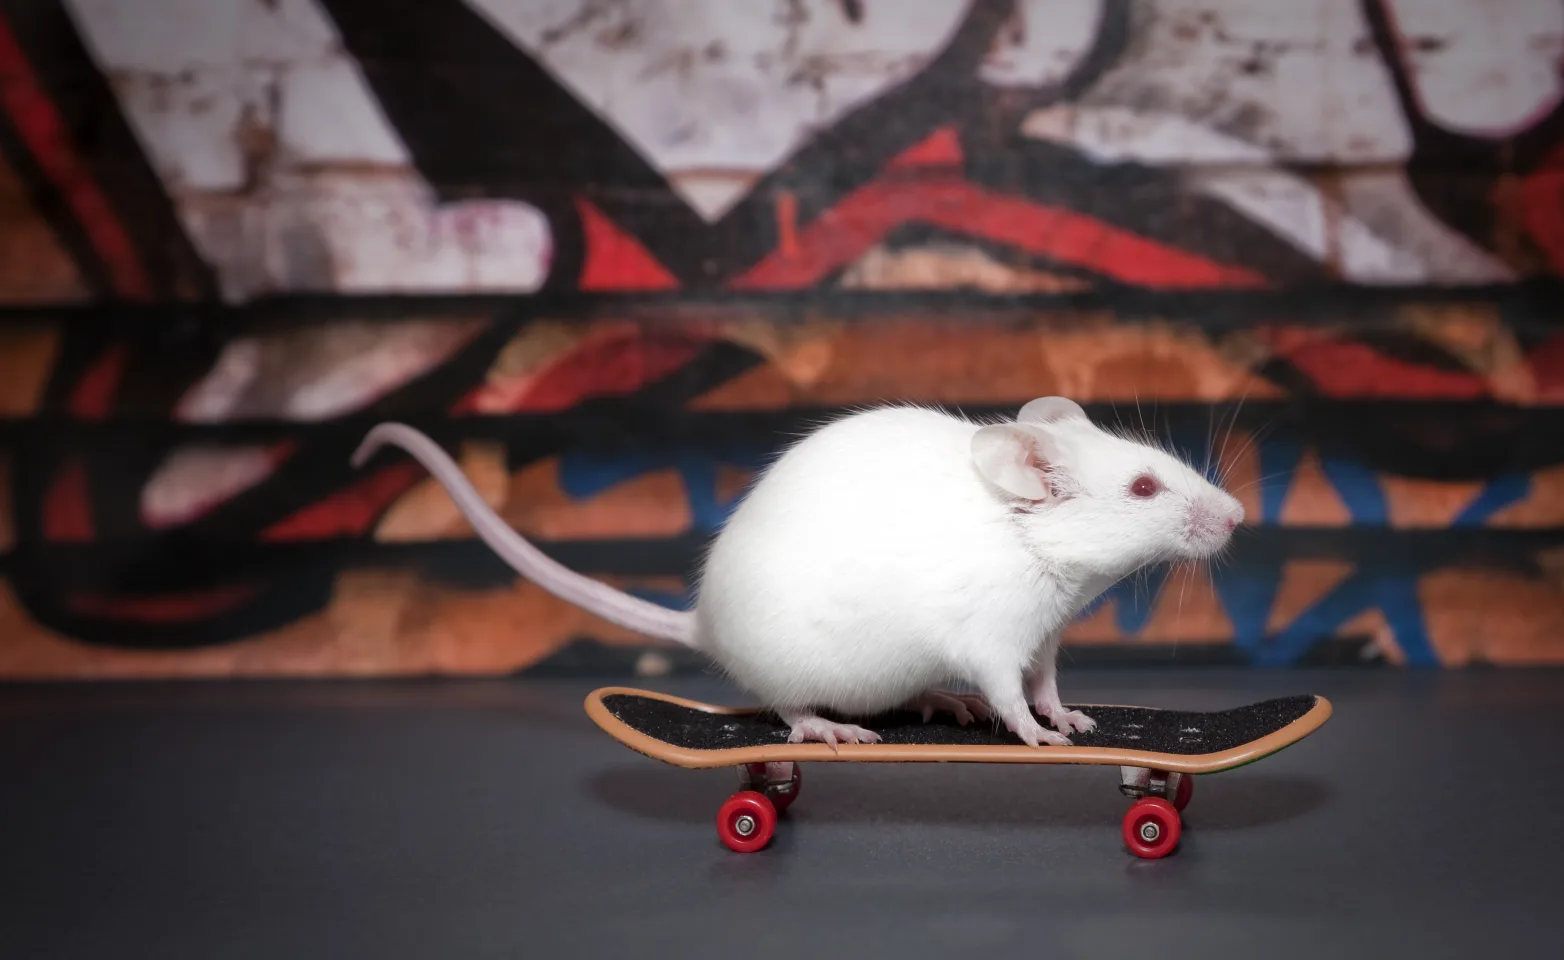 Mouse riding a skateboard